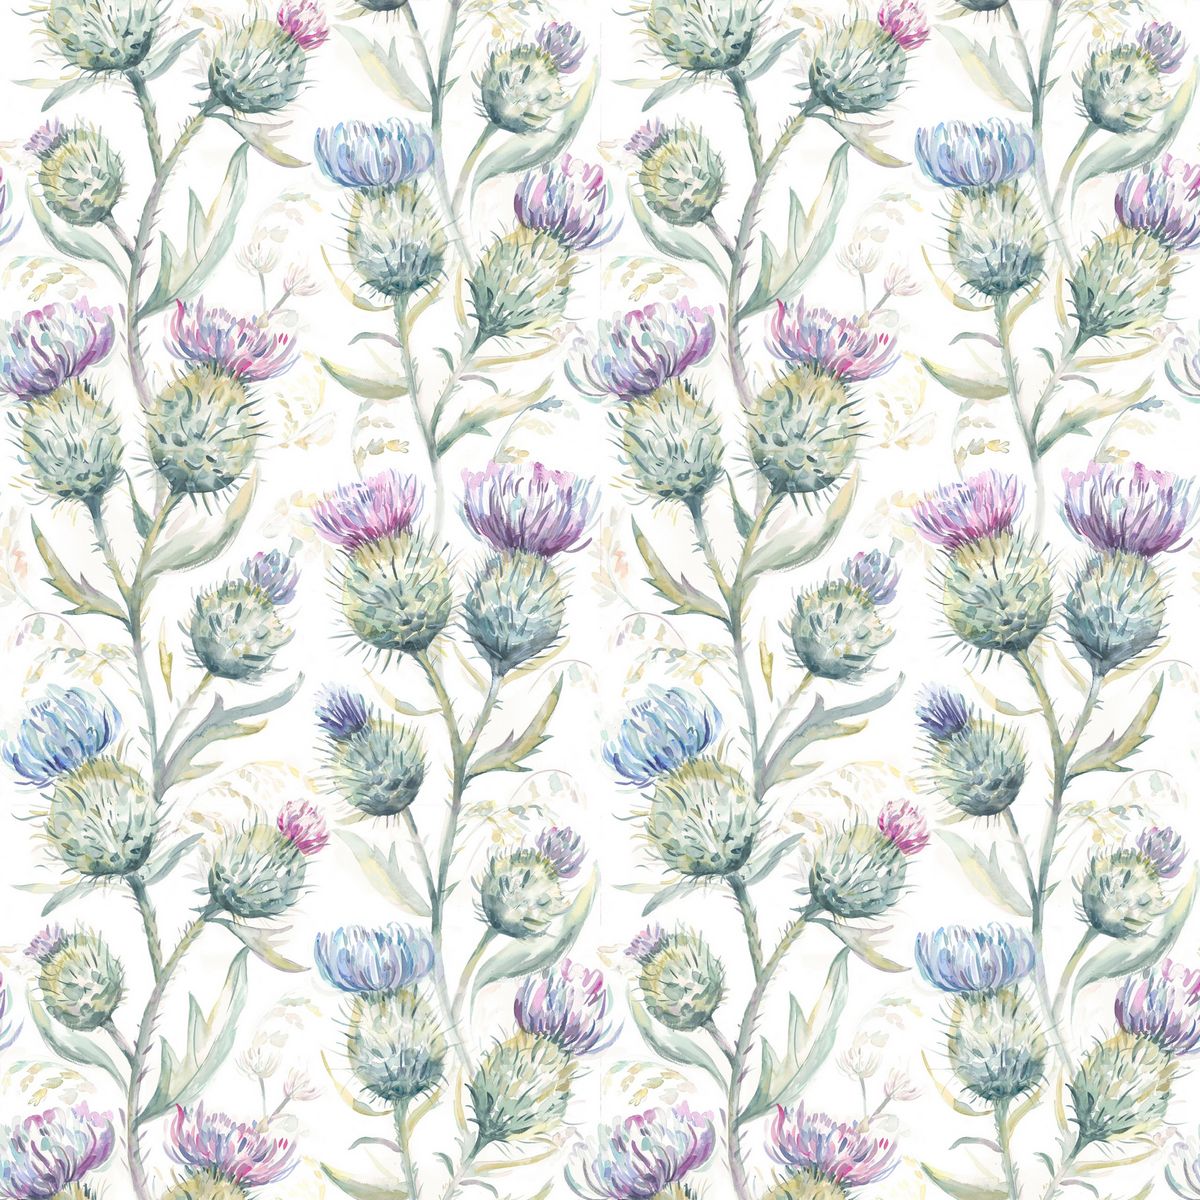 Thistle Glen Spring Cream Fabric by Voyage Maison